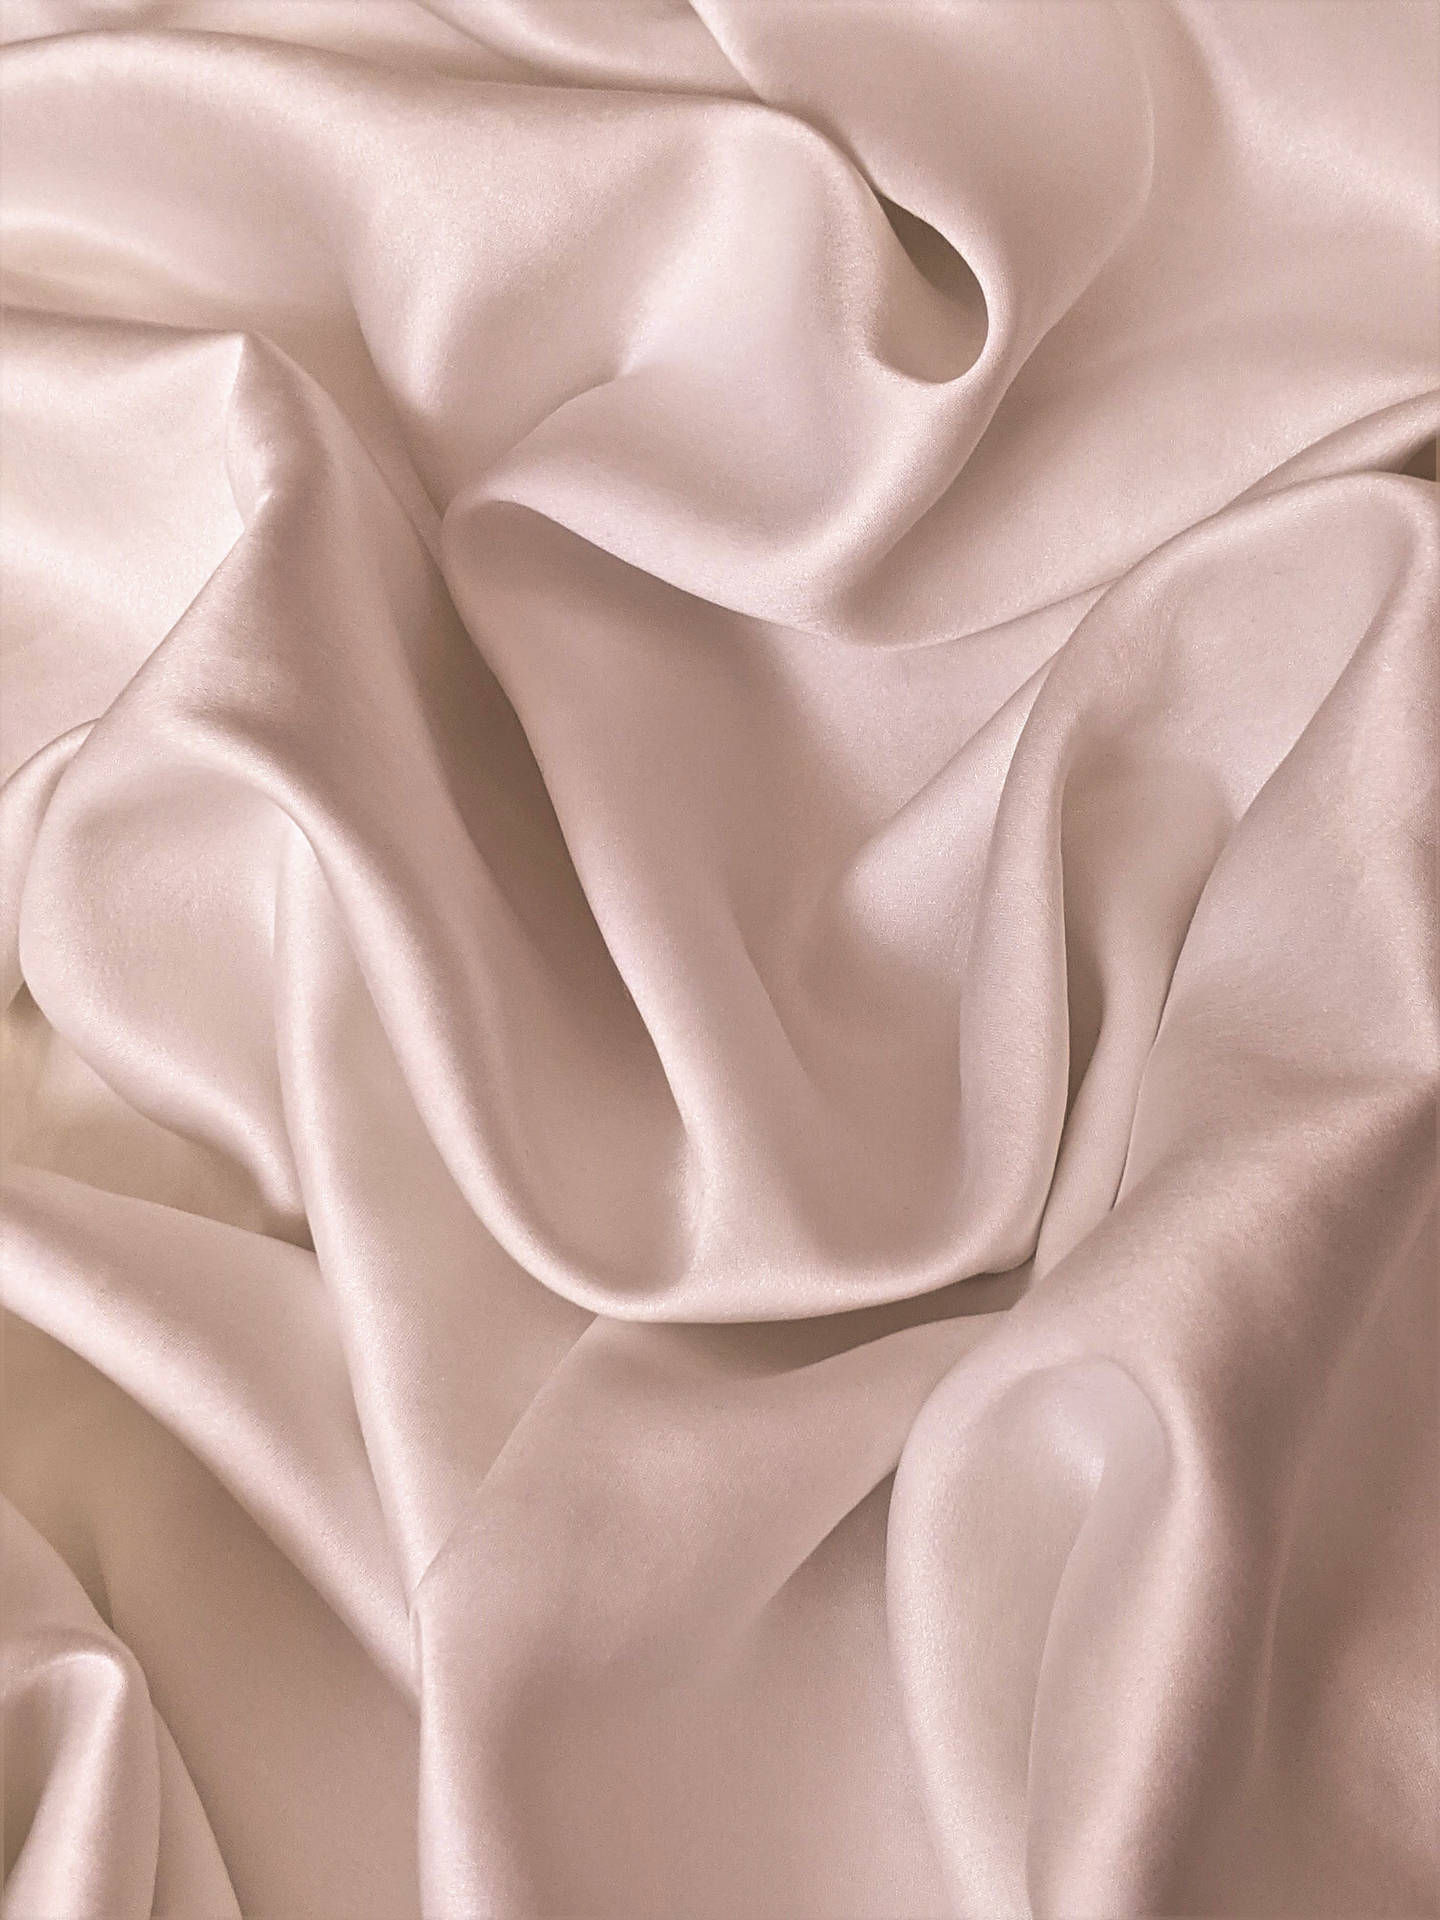 Nude Silk Fabric Background